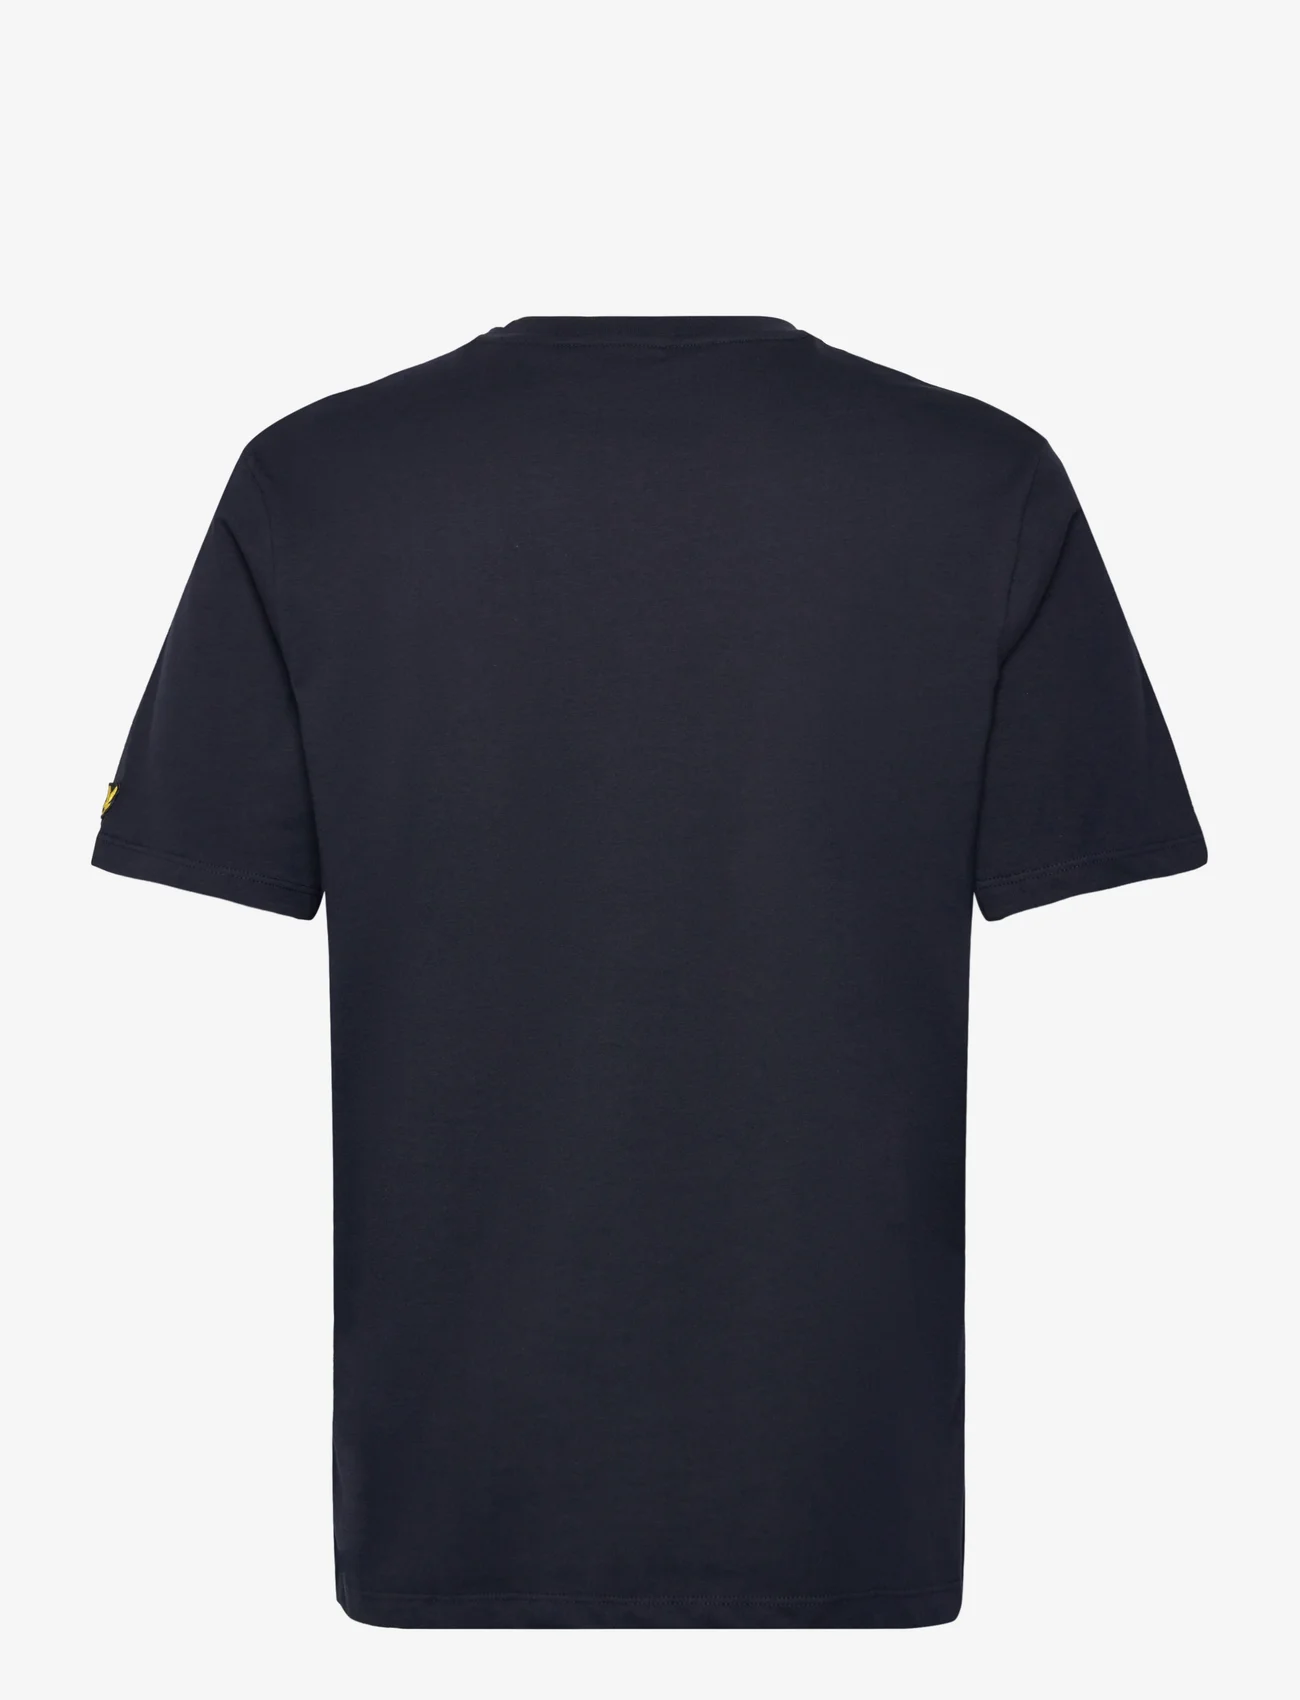 Lyle & Scott - Club Emblem T-Shirt - short-sleeved t-shirts - z271 dark navy - 1